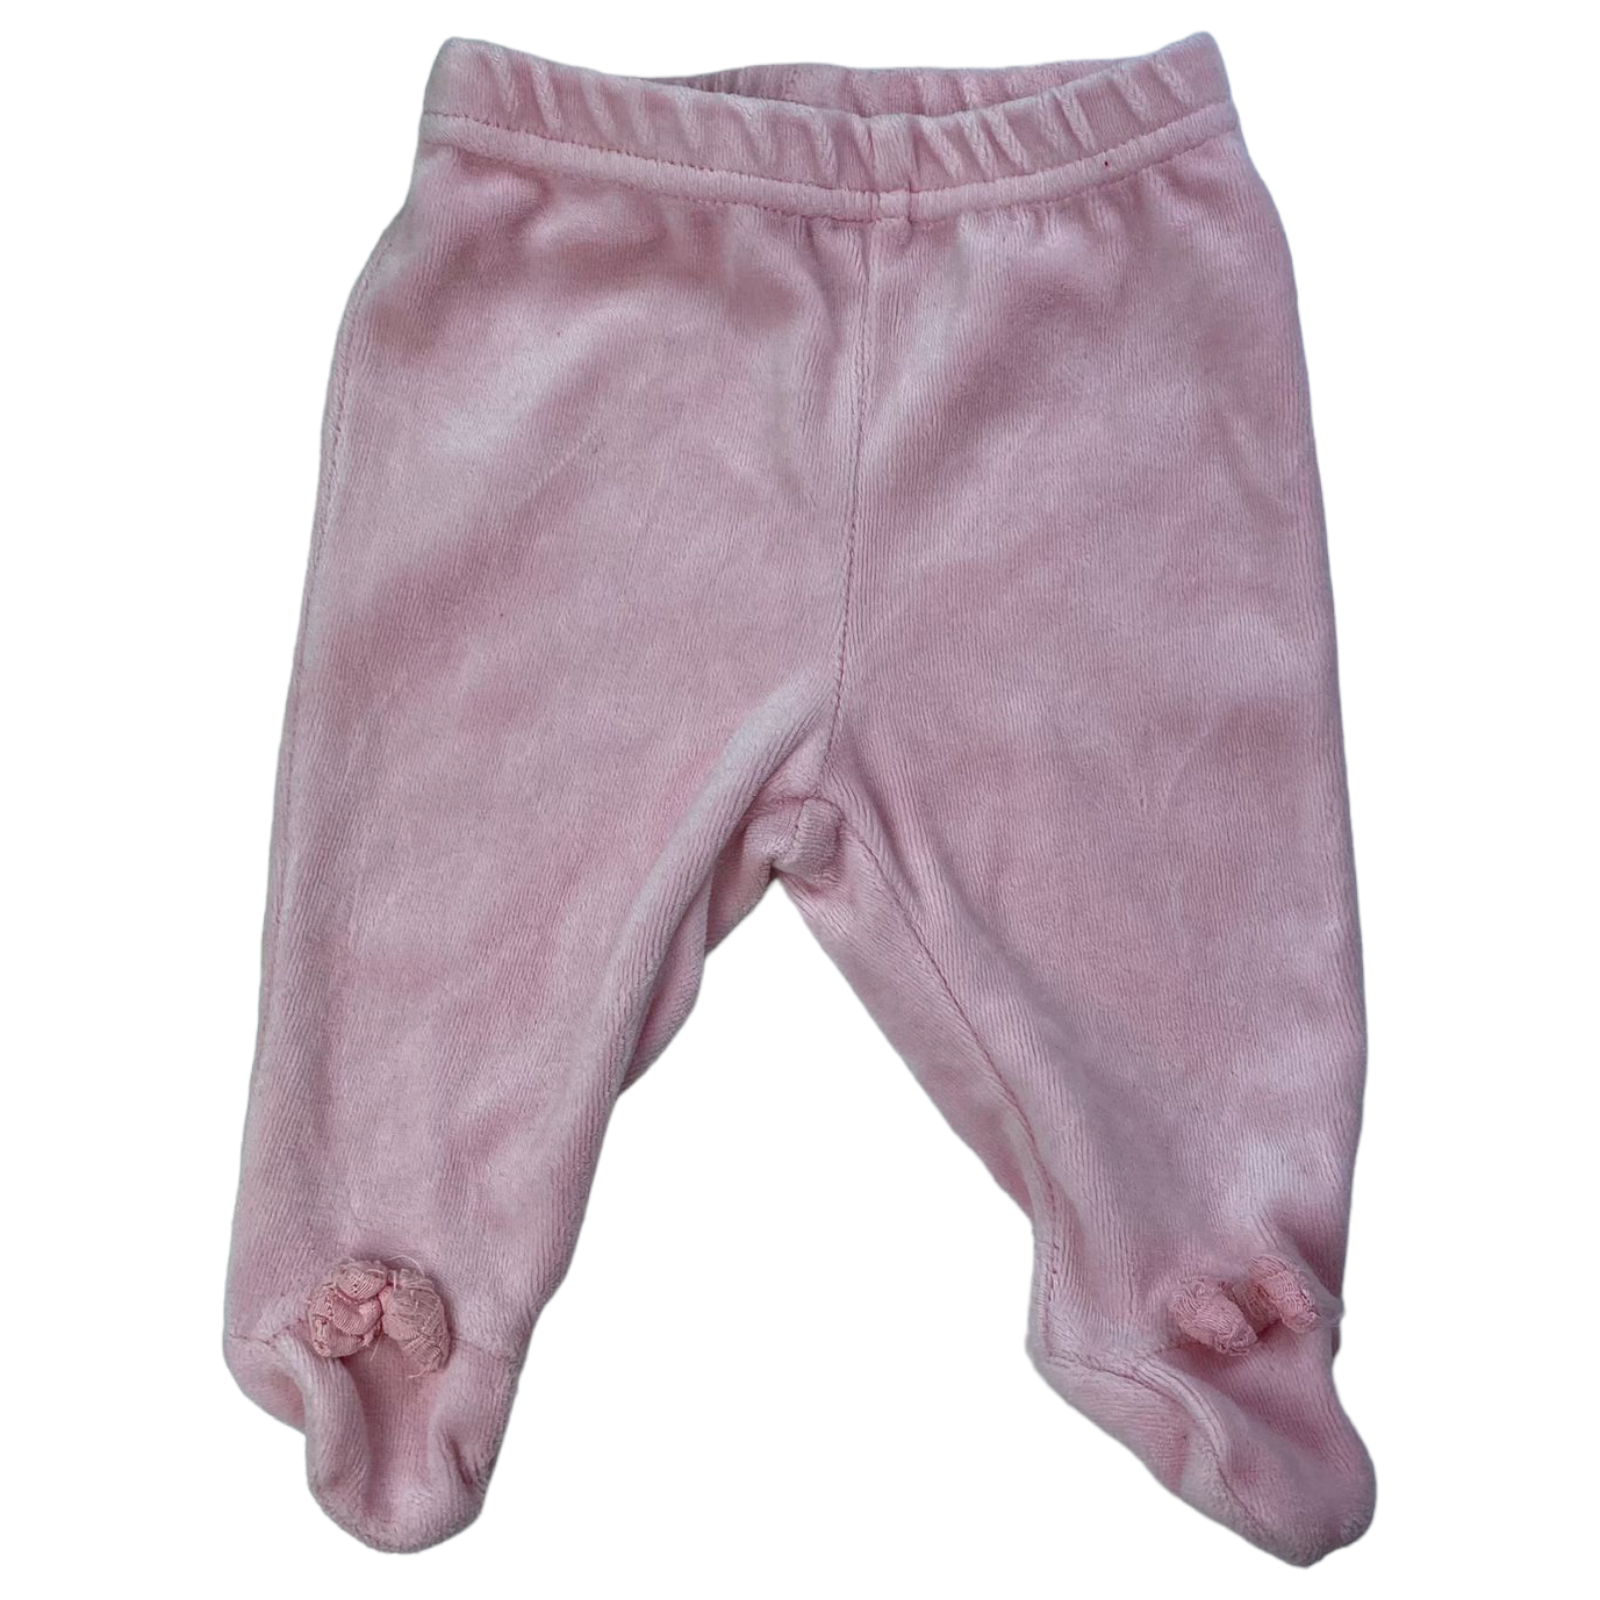 Panty de plush rosada con lazo